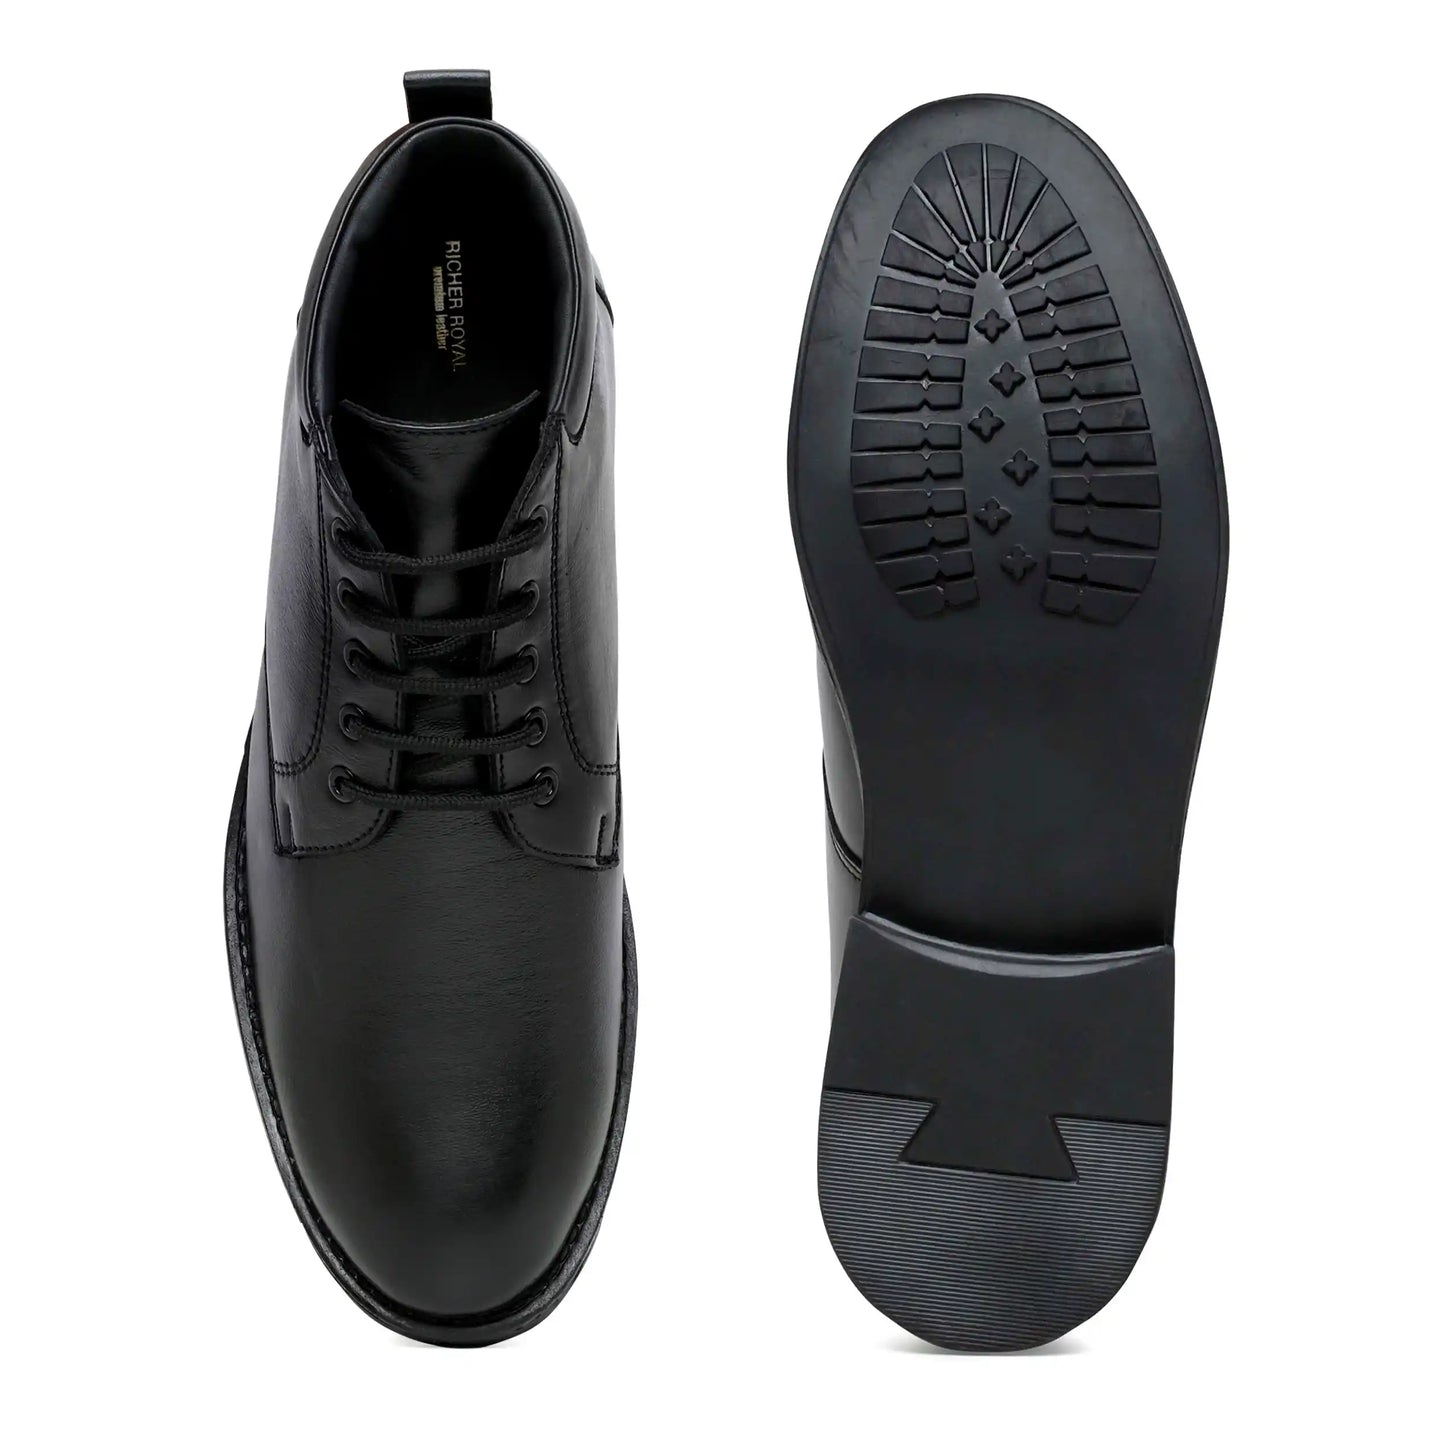 Men Pure Leather Ankle Shoes, Black Boots